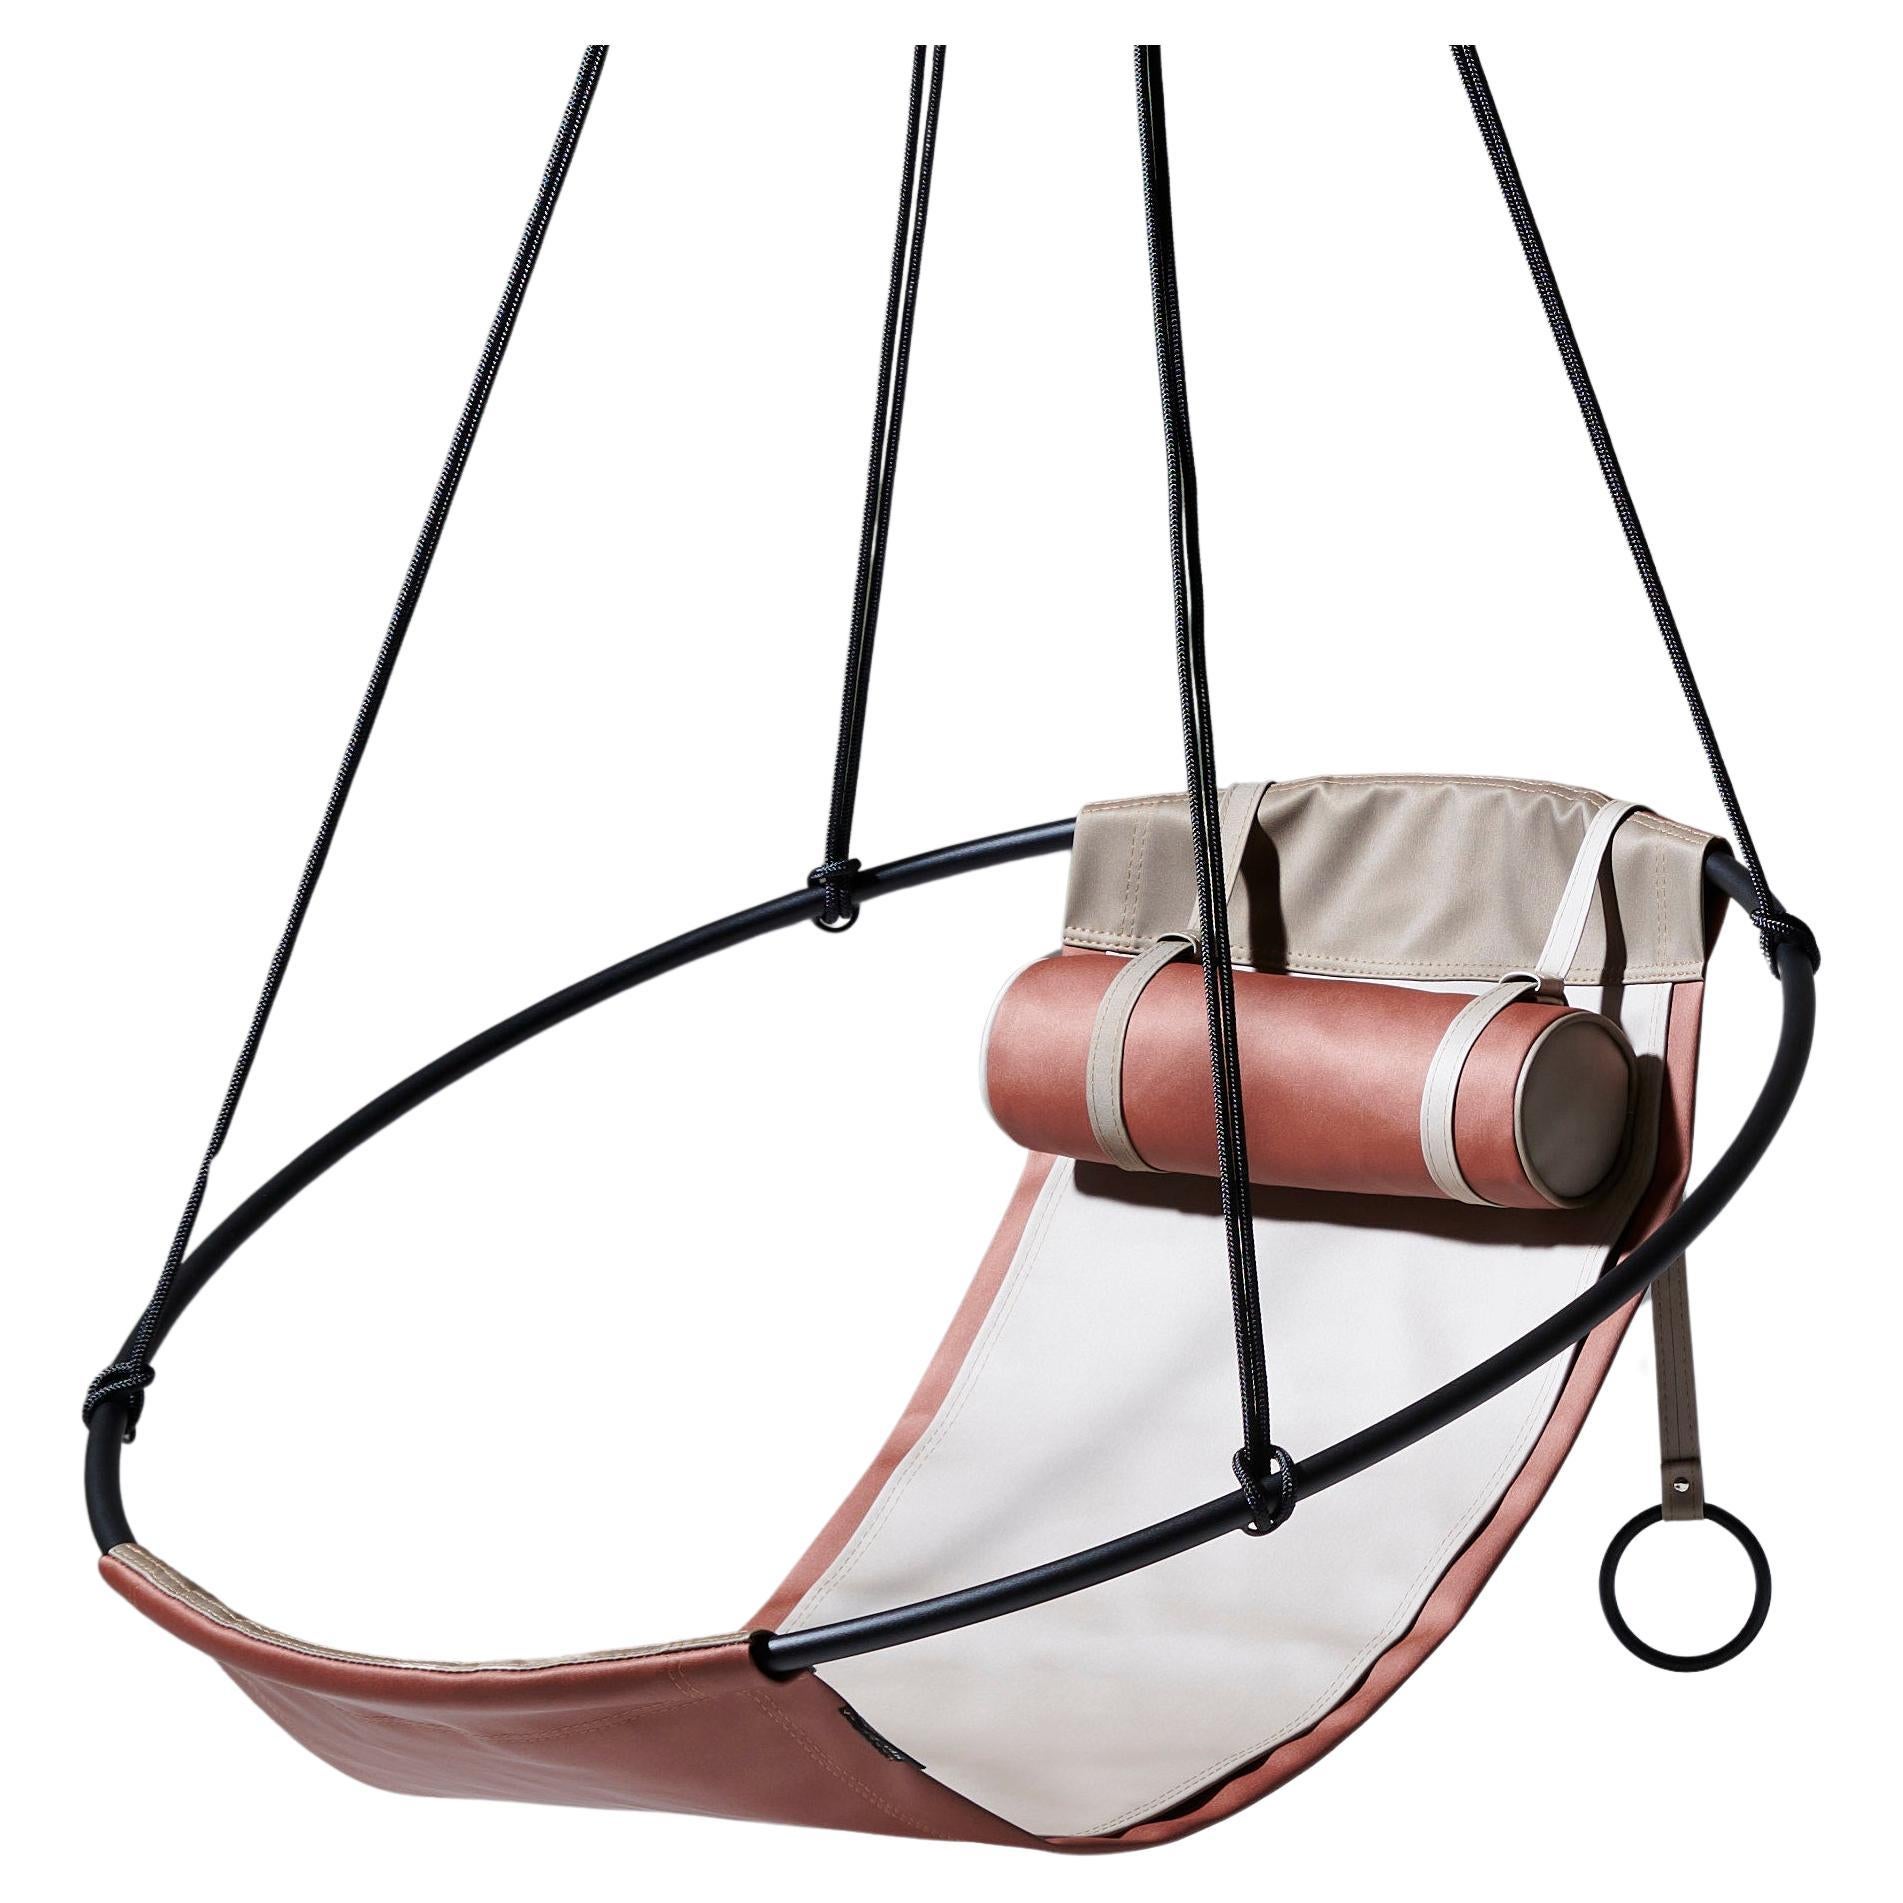 Modern Outdoor Garden Swing Chair in Earth Tones For Sale